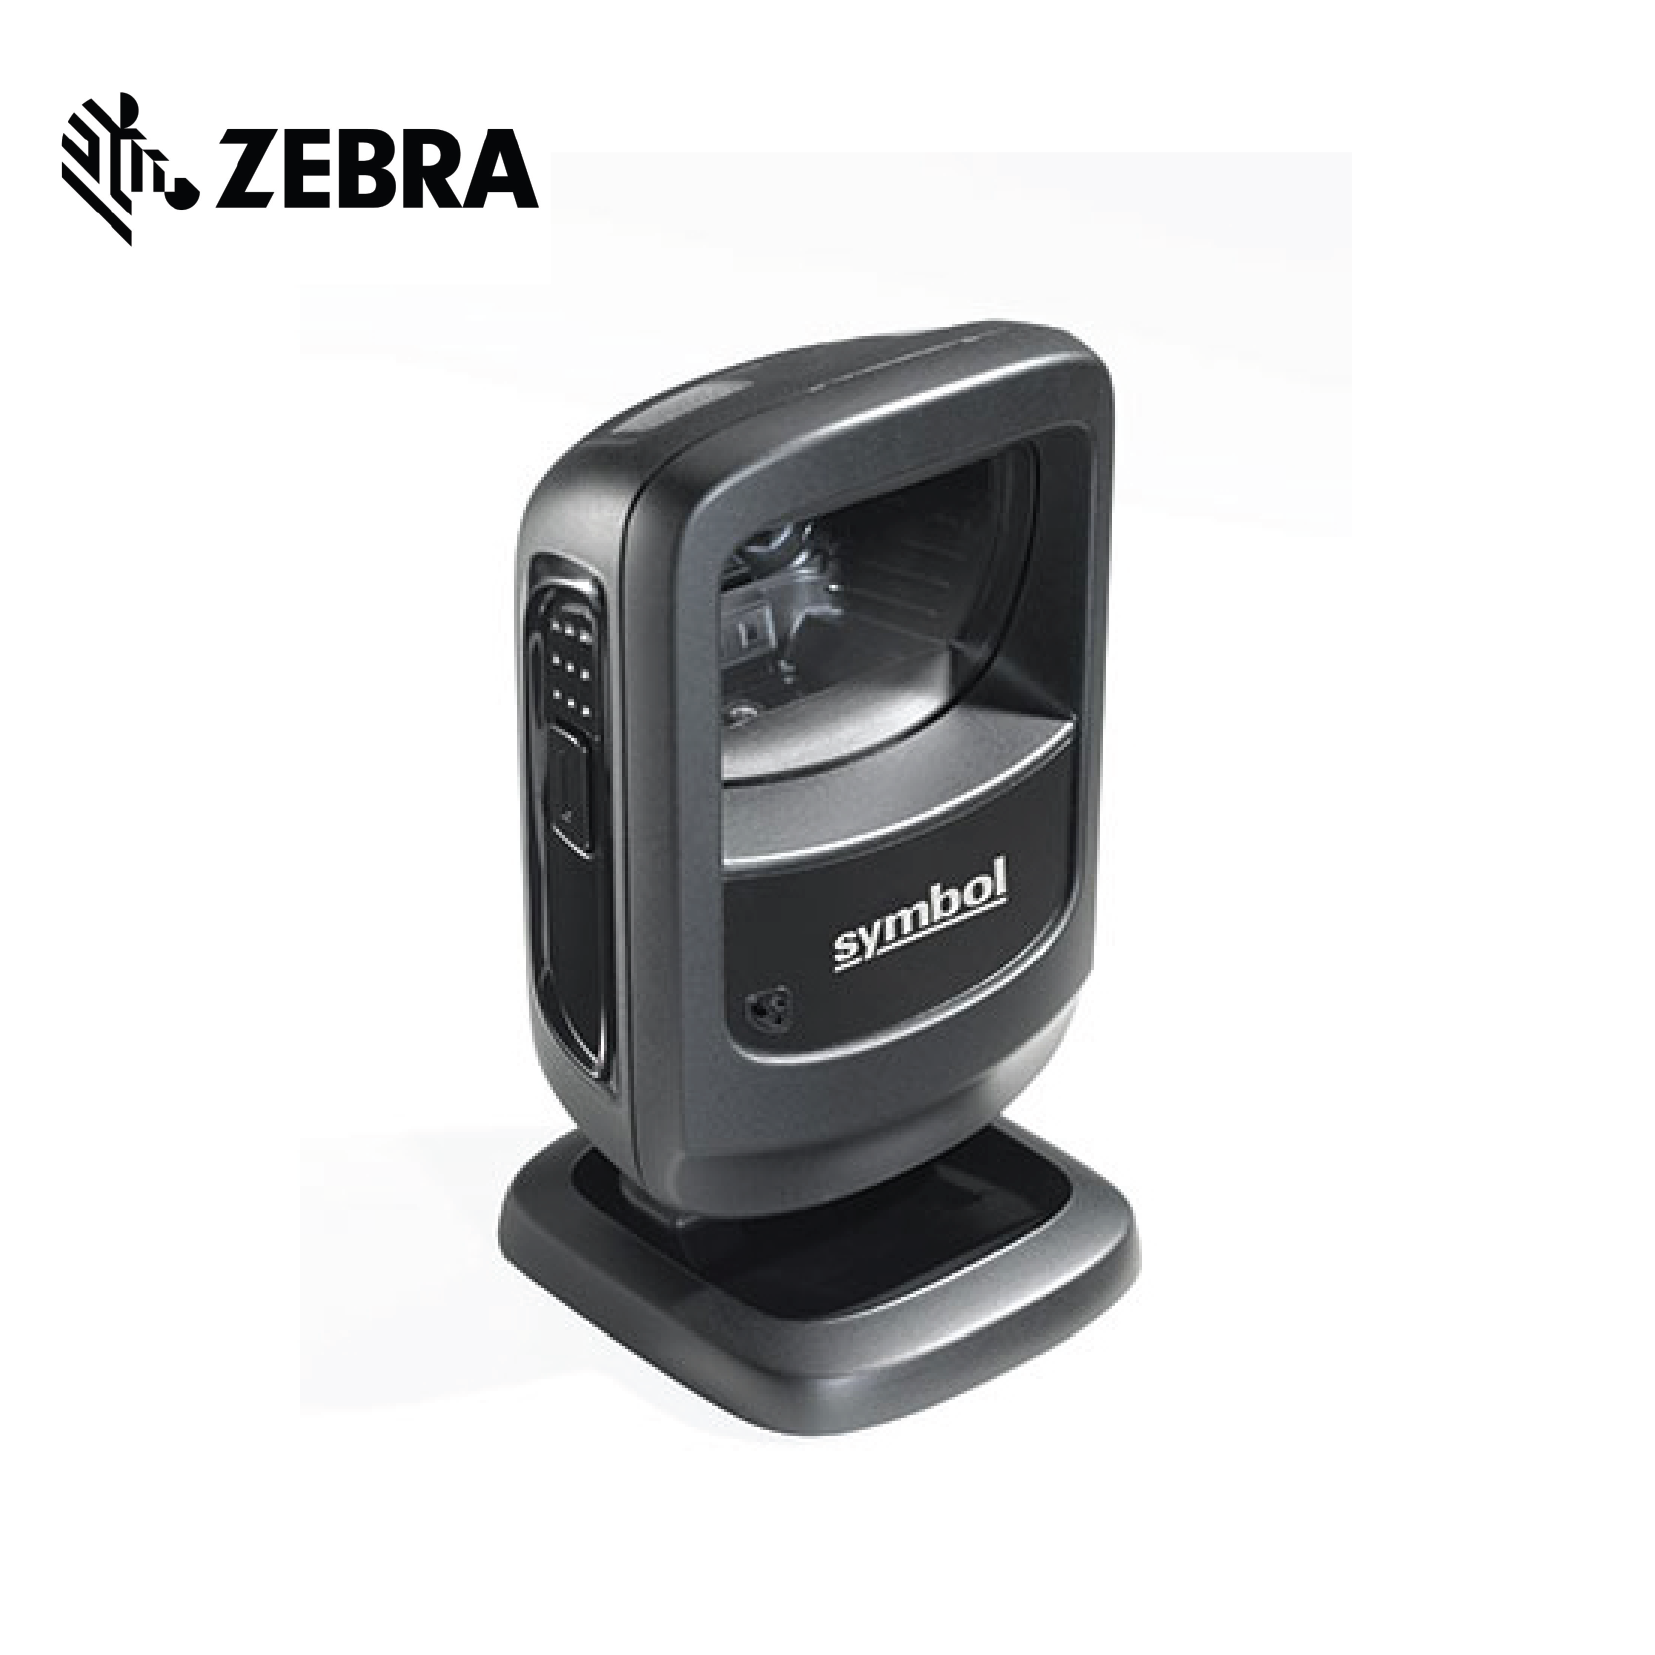 Штрих сканер зебра. Zebra ds9208. Zebra сканер штрих кодов DS 9208. Сканер штрих кодов Моторола ds9208. Symbol ds9208 USB.